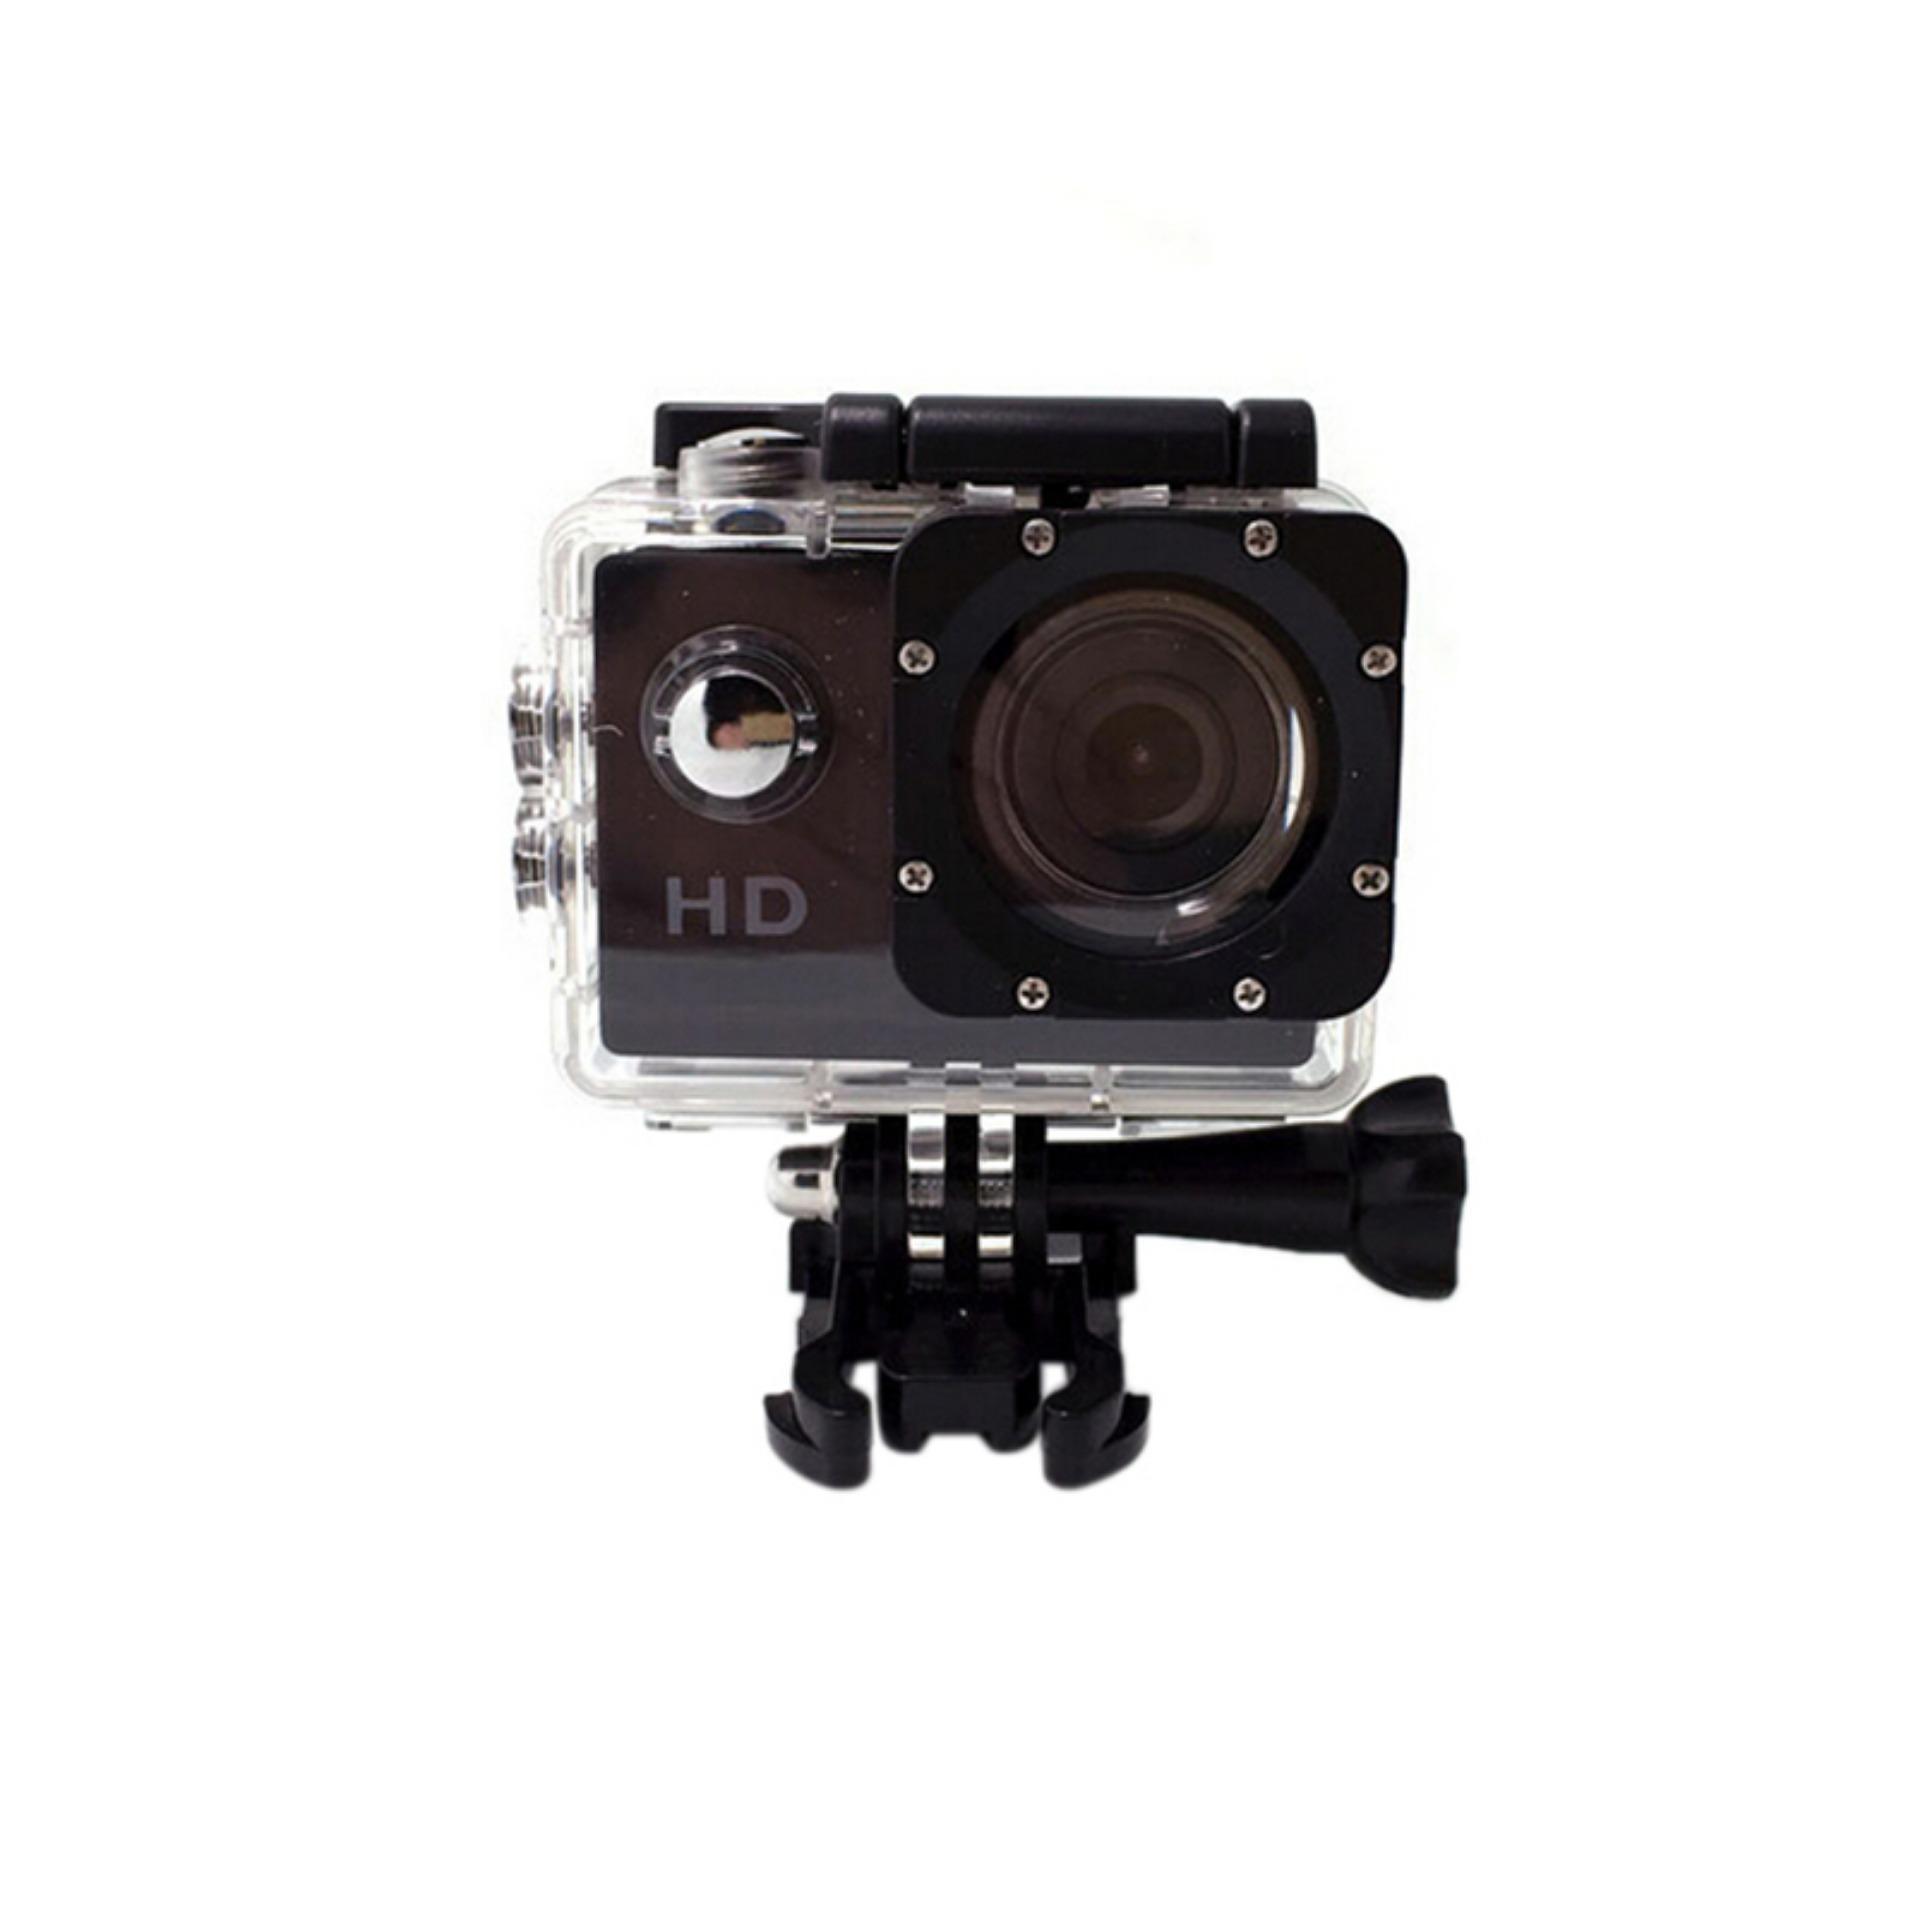 30M Waterproof 1080P Full HD Action Diving Camera Underwater Sport Cameras Black - intl